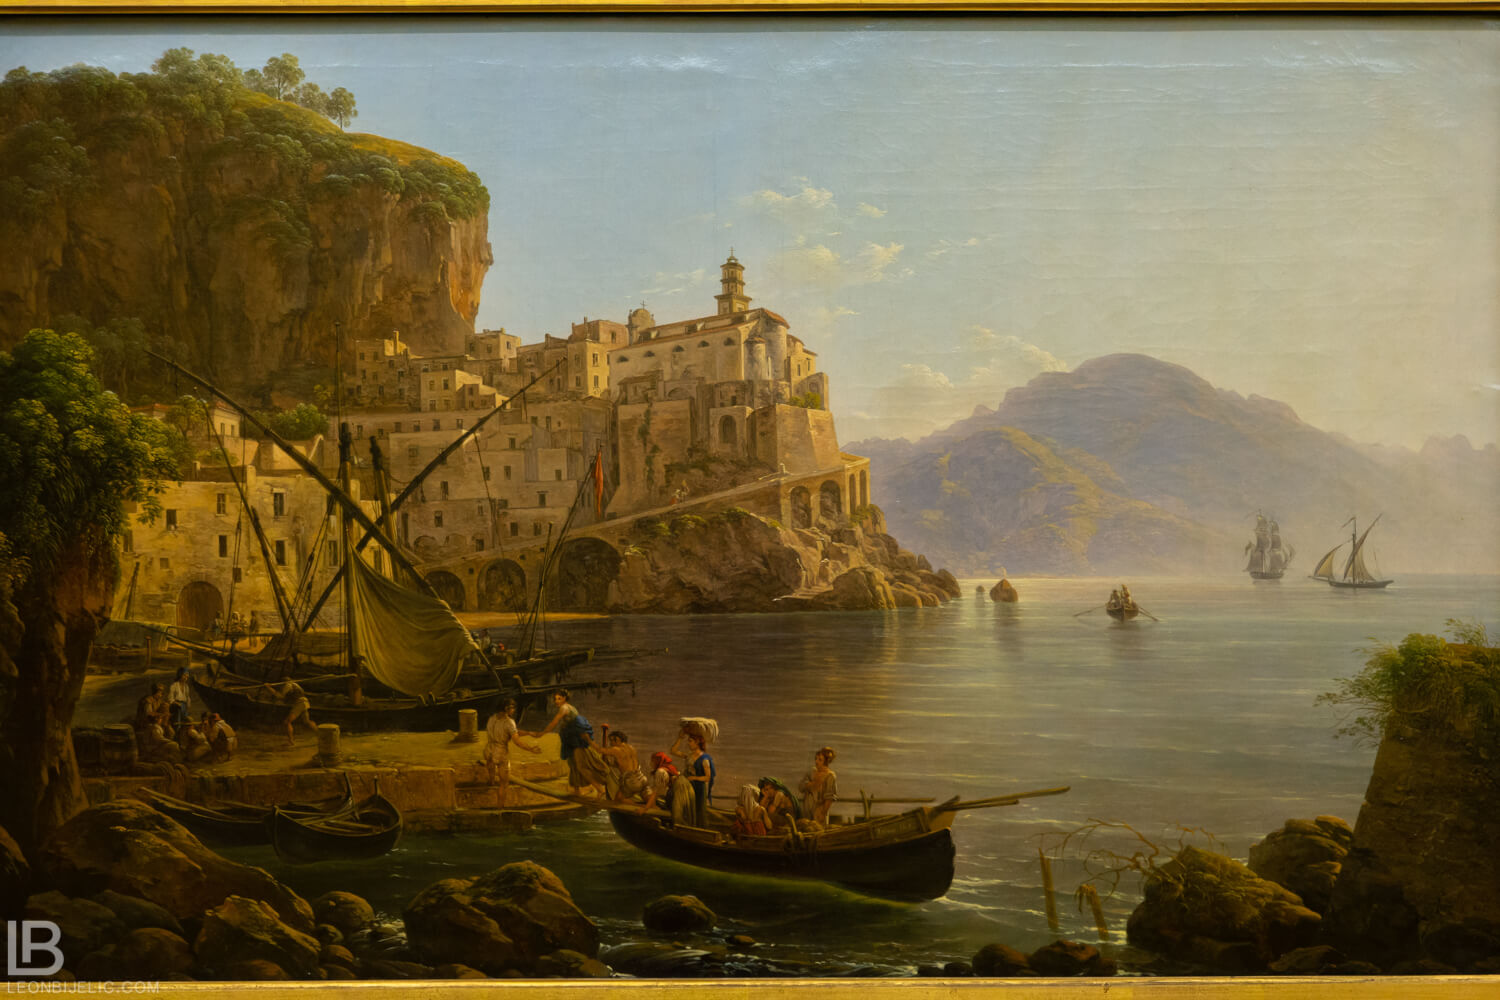 KUNSTHALLE MUSEUM - HAMBURG - PHOTOS BY LEON BIJELIC - Germany - Kunst - Art - Painting - Joseph Rebell - View of Atrani near Amalfi - 1817 - Oil on canvas